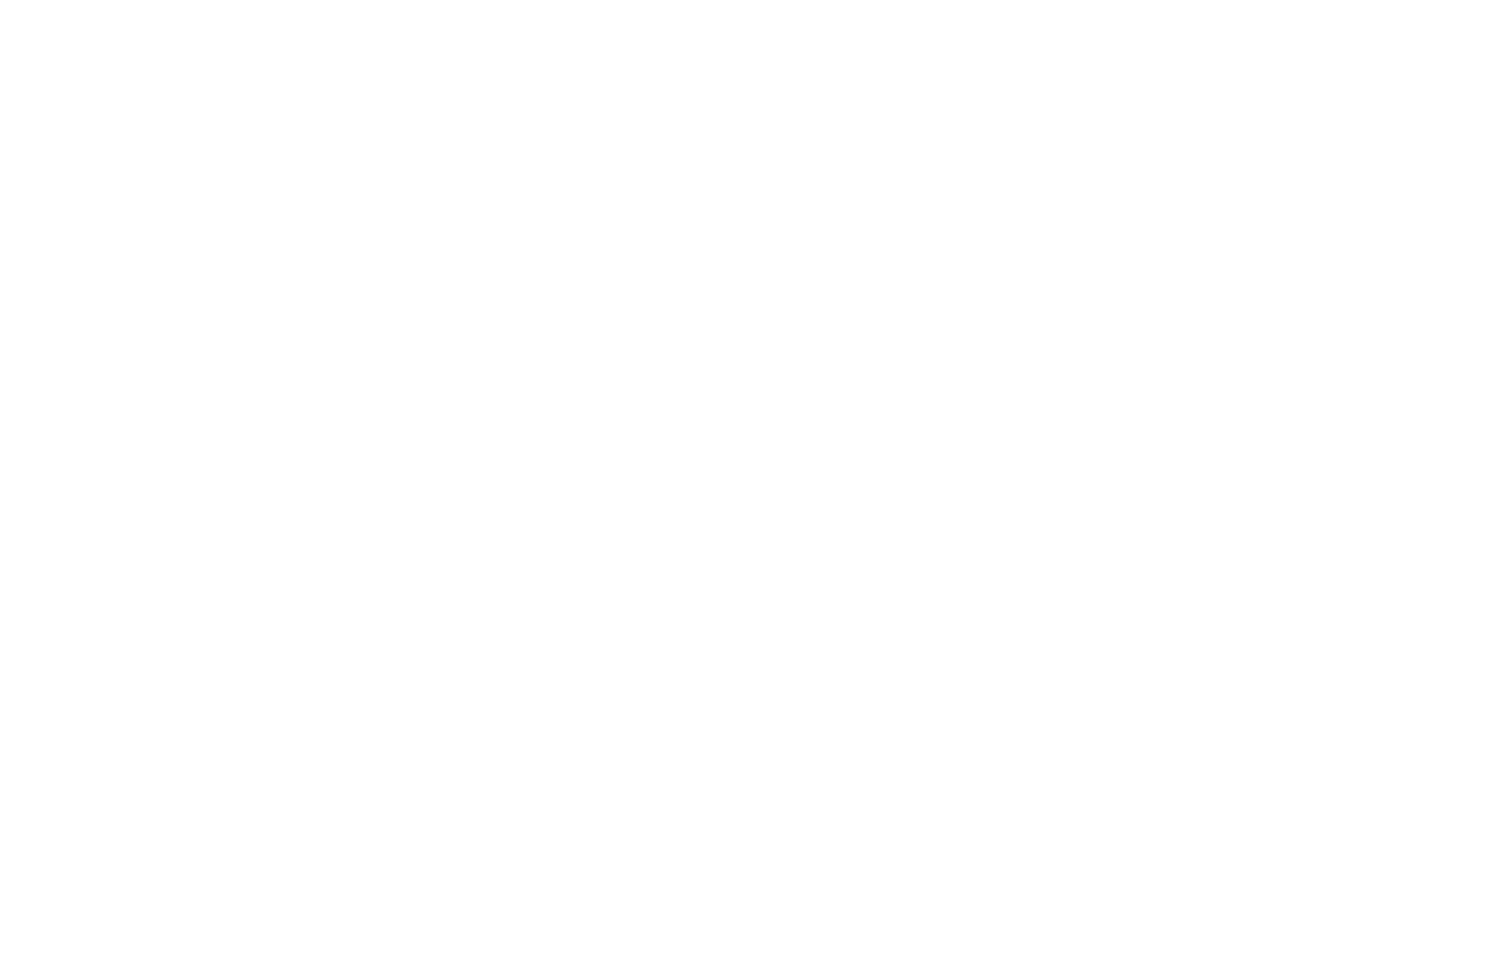 Morley Marina